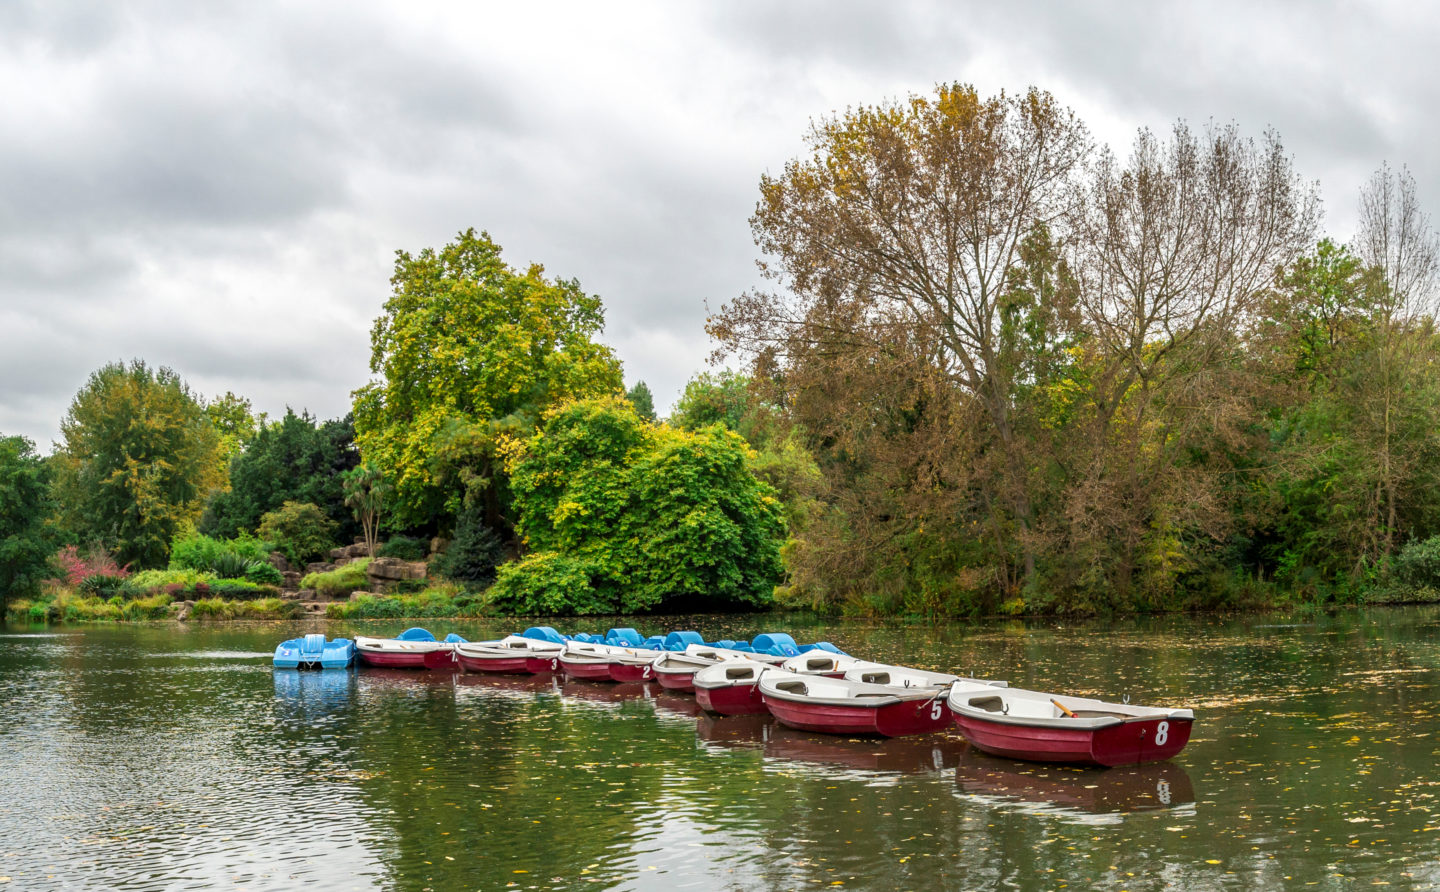 Boating Lake in Battersea Park